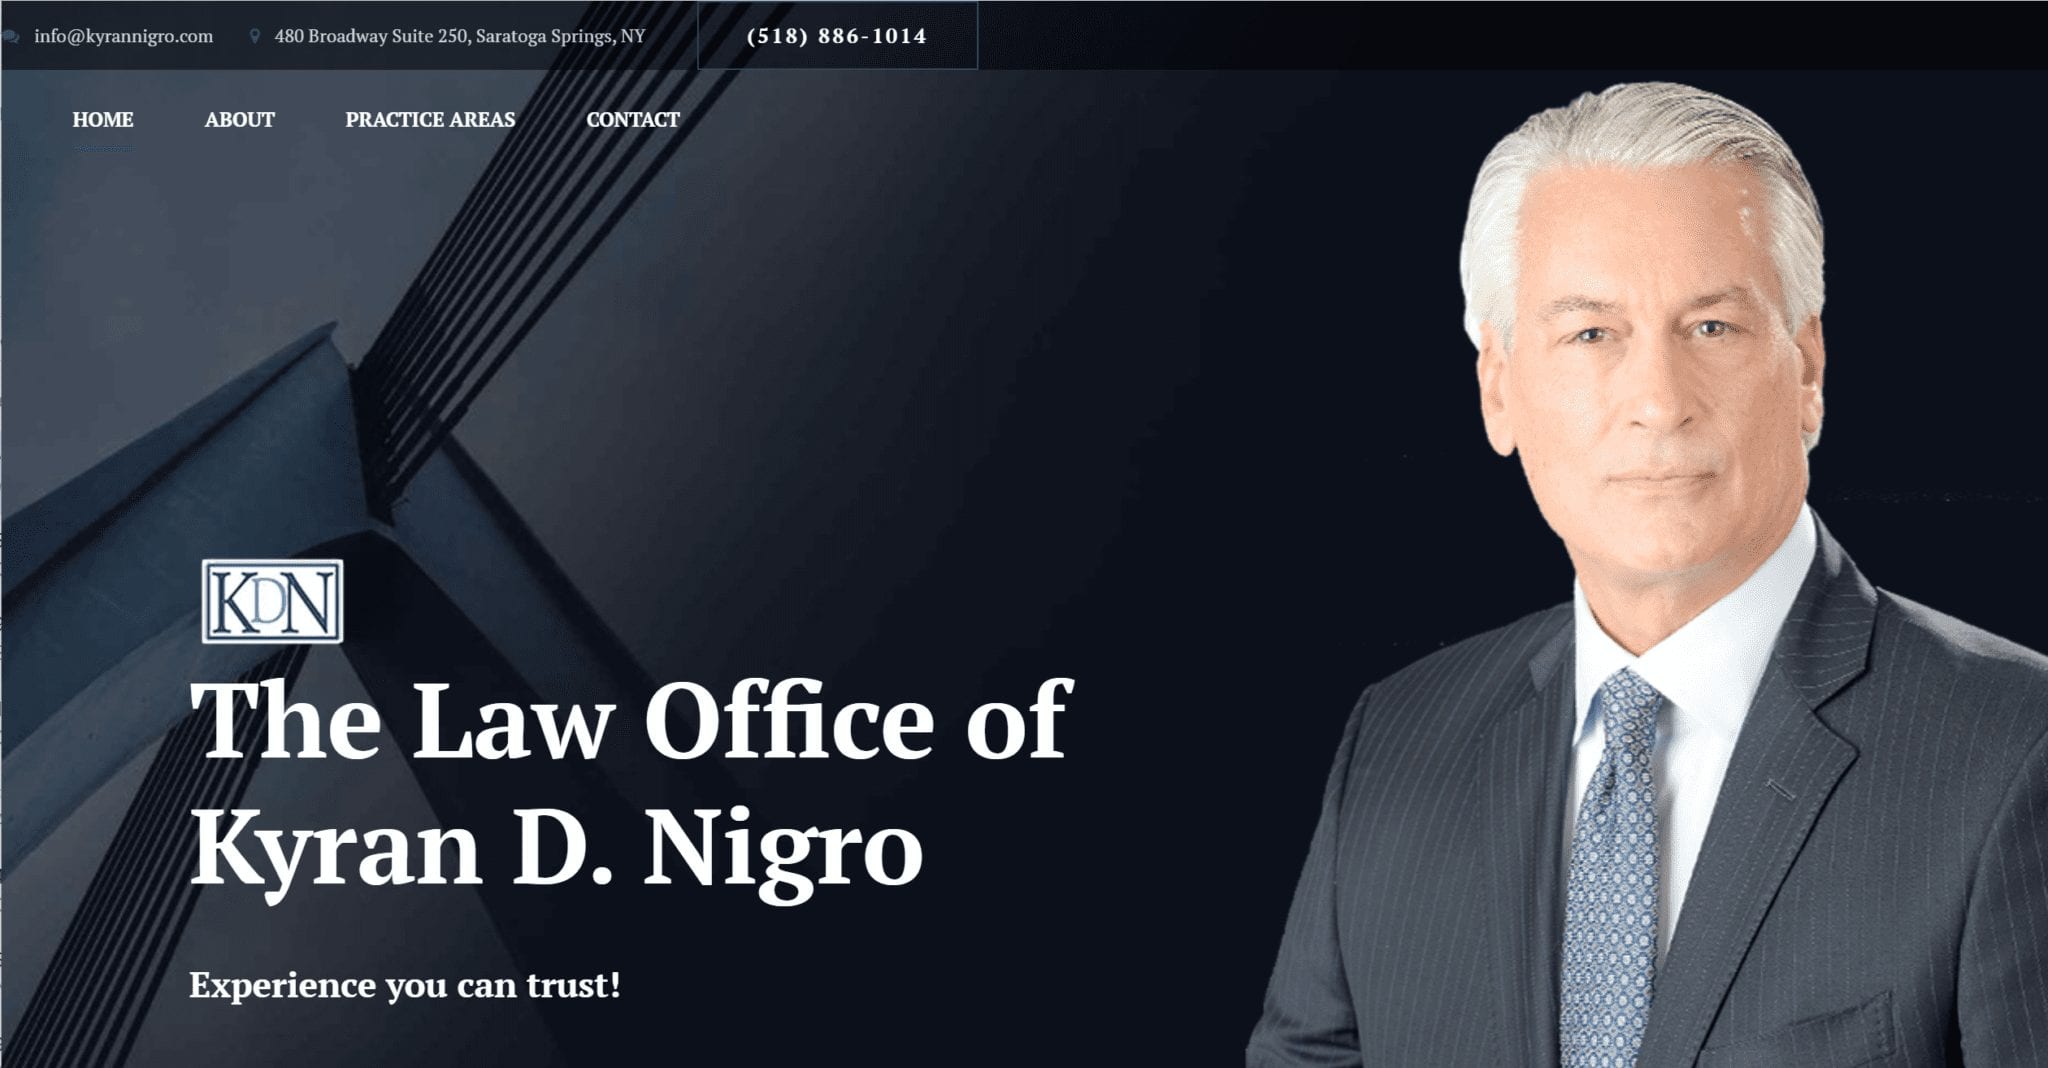 The Law Office of Kyran D. Nigro website screen shot